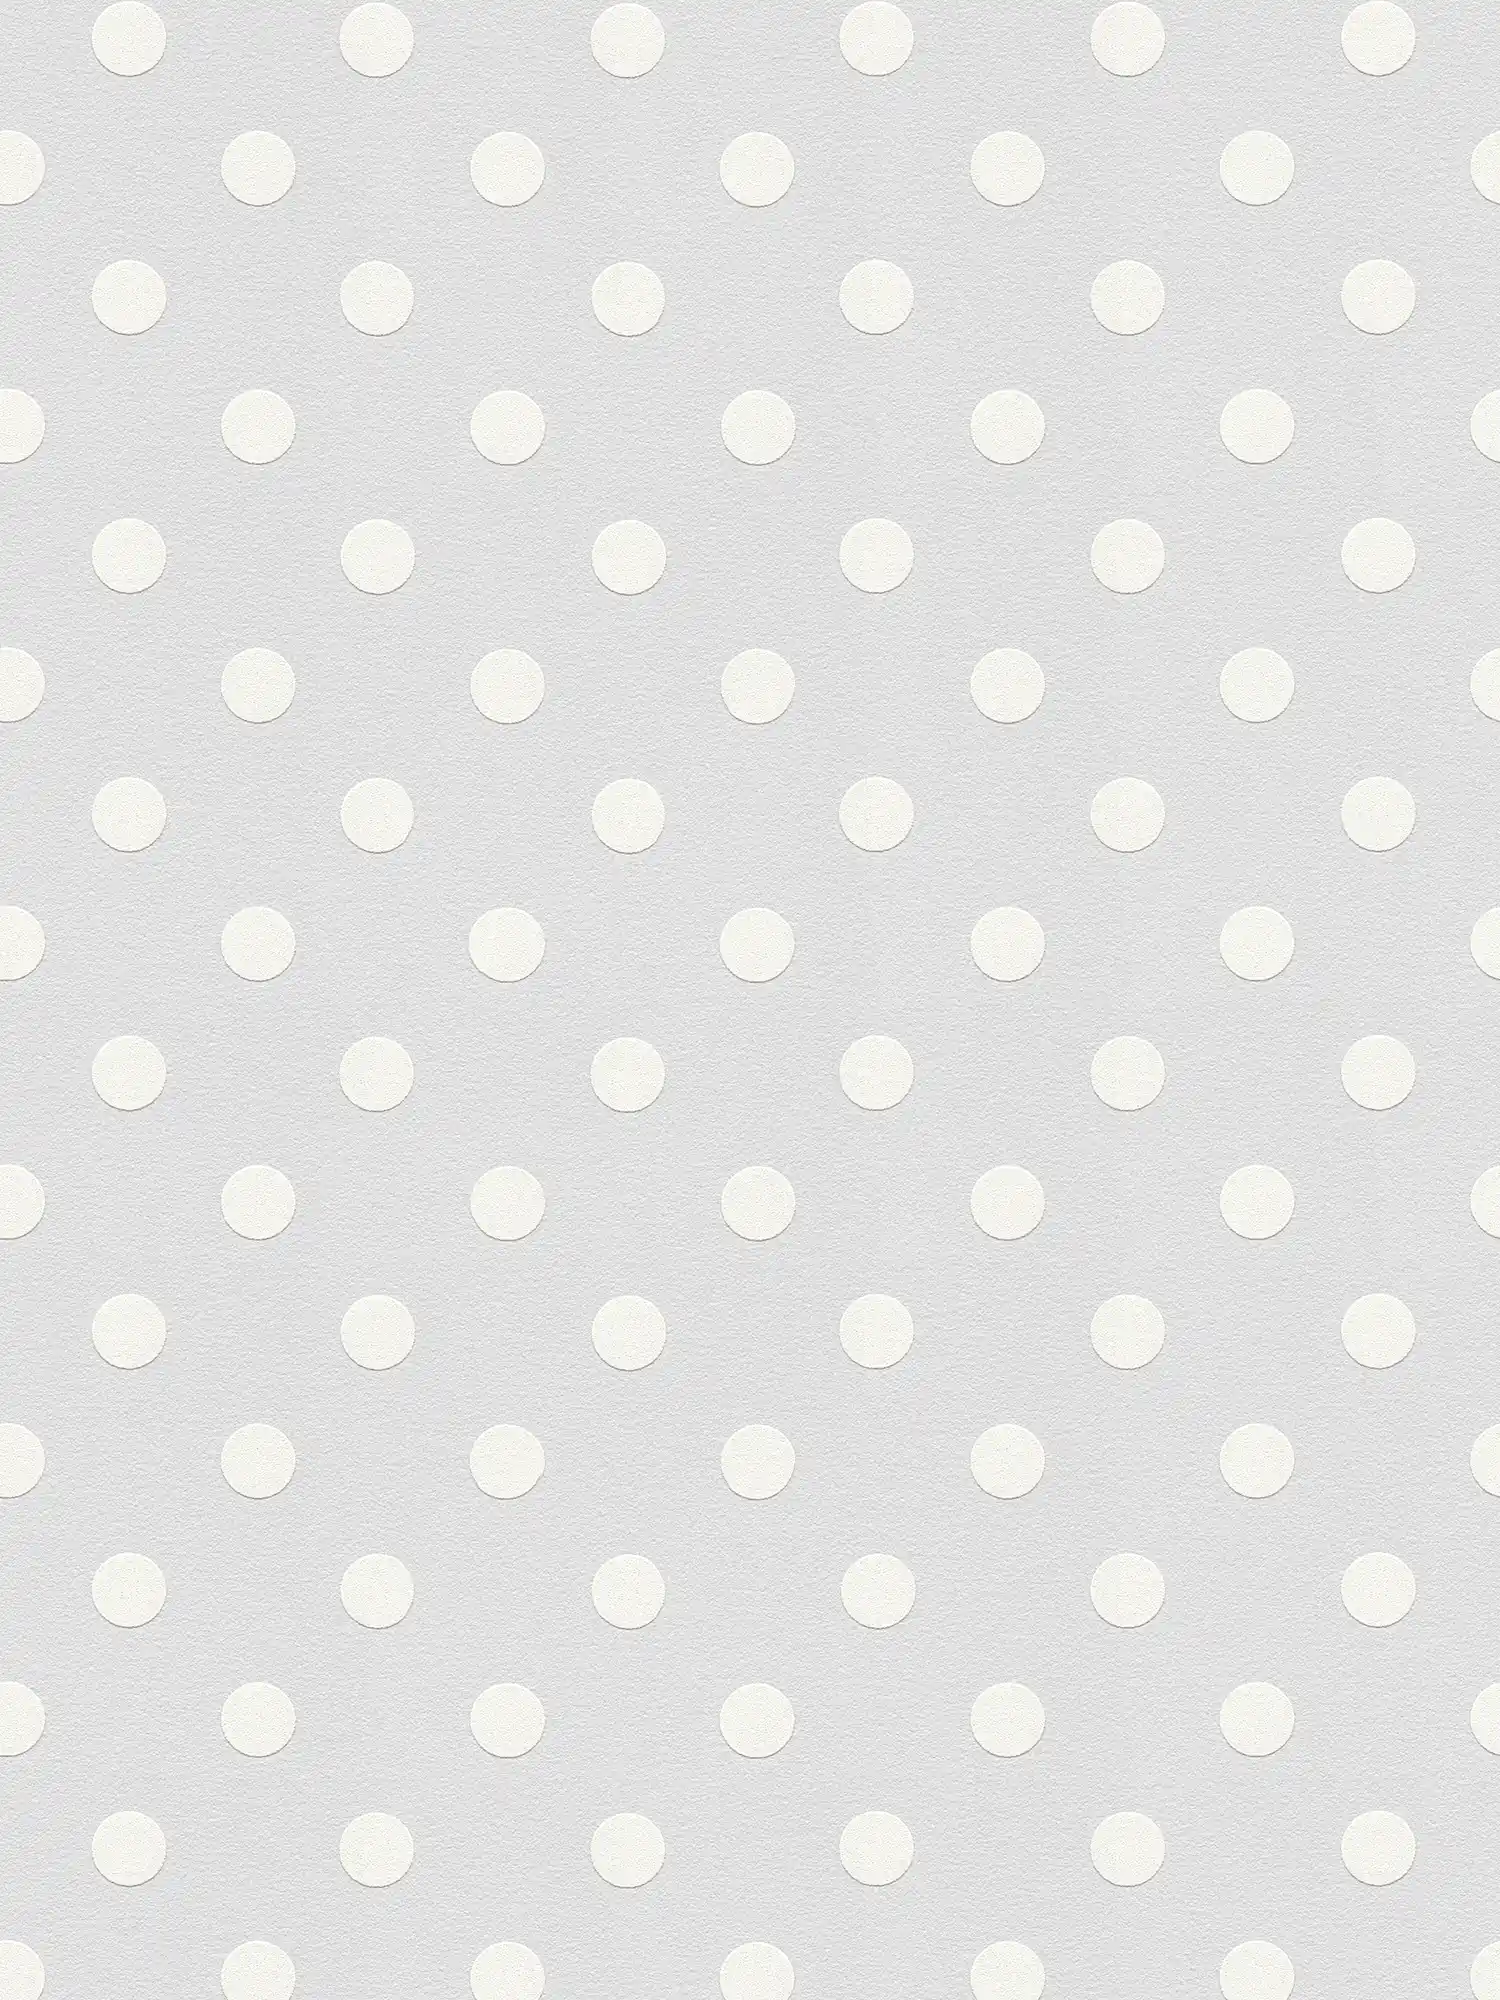 Polka dots design wallpaper - grey, white
